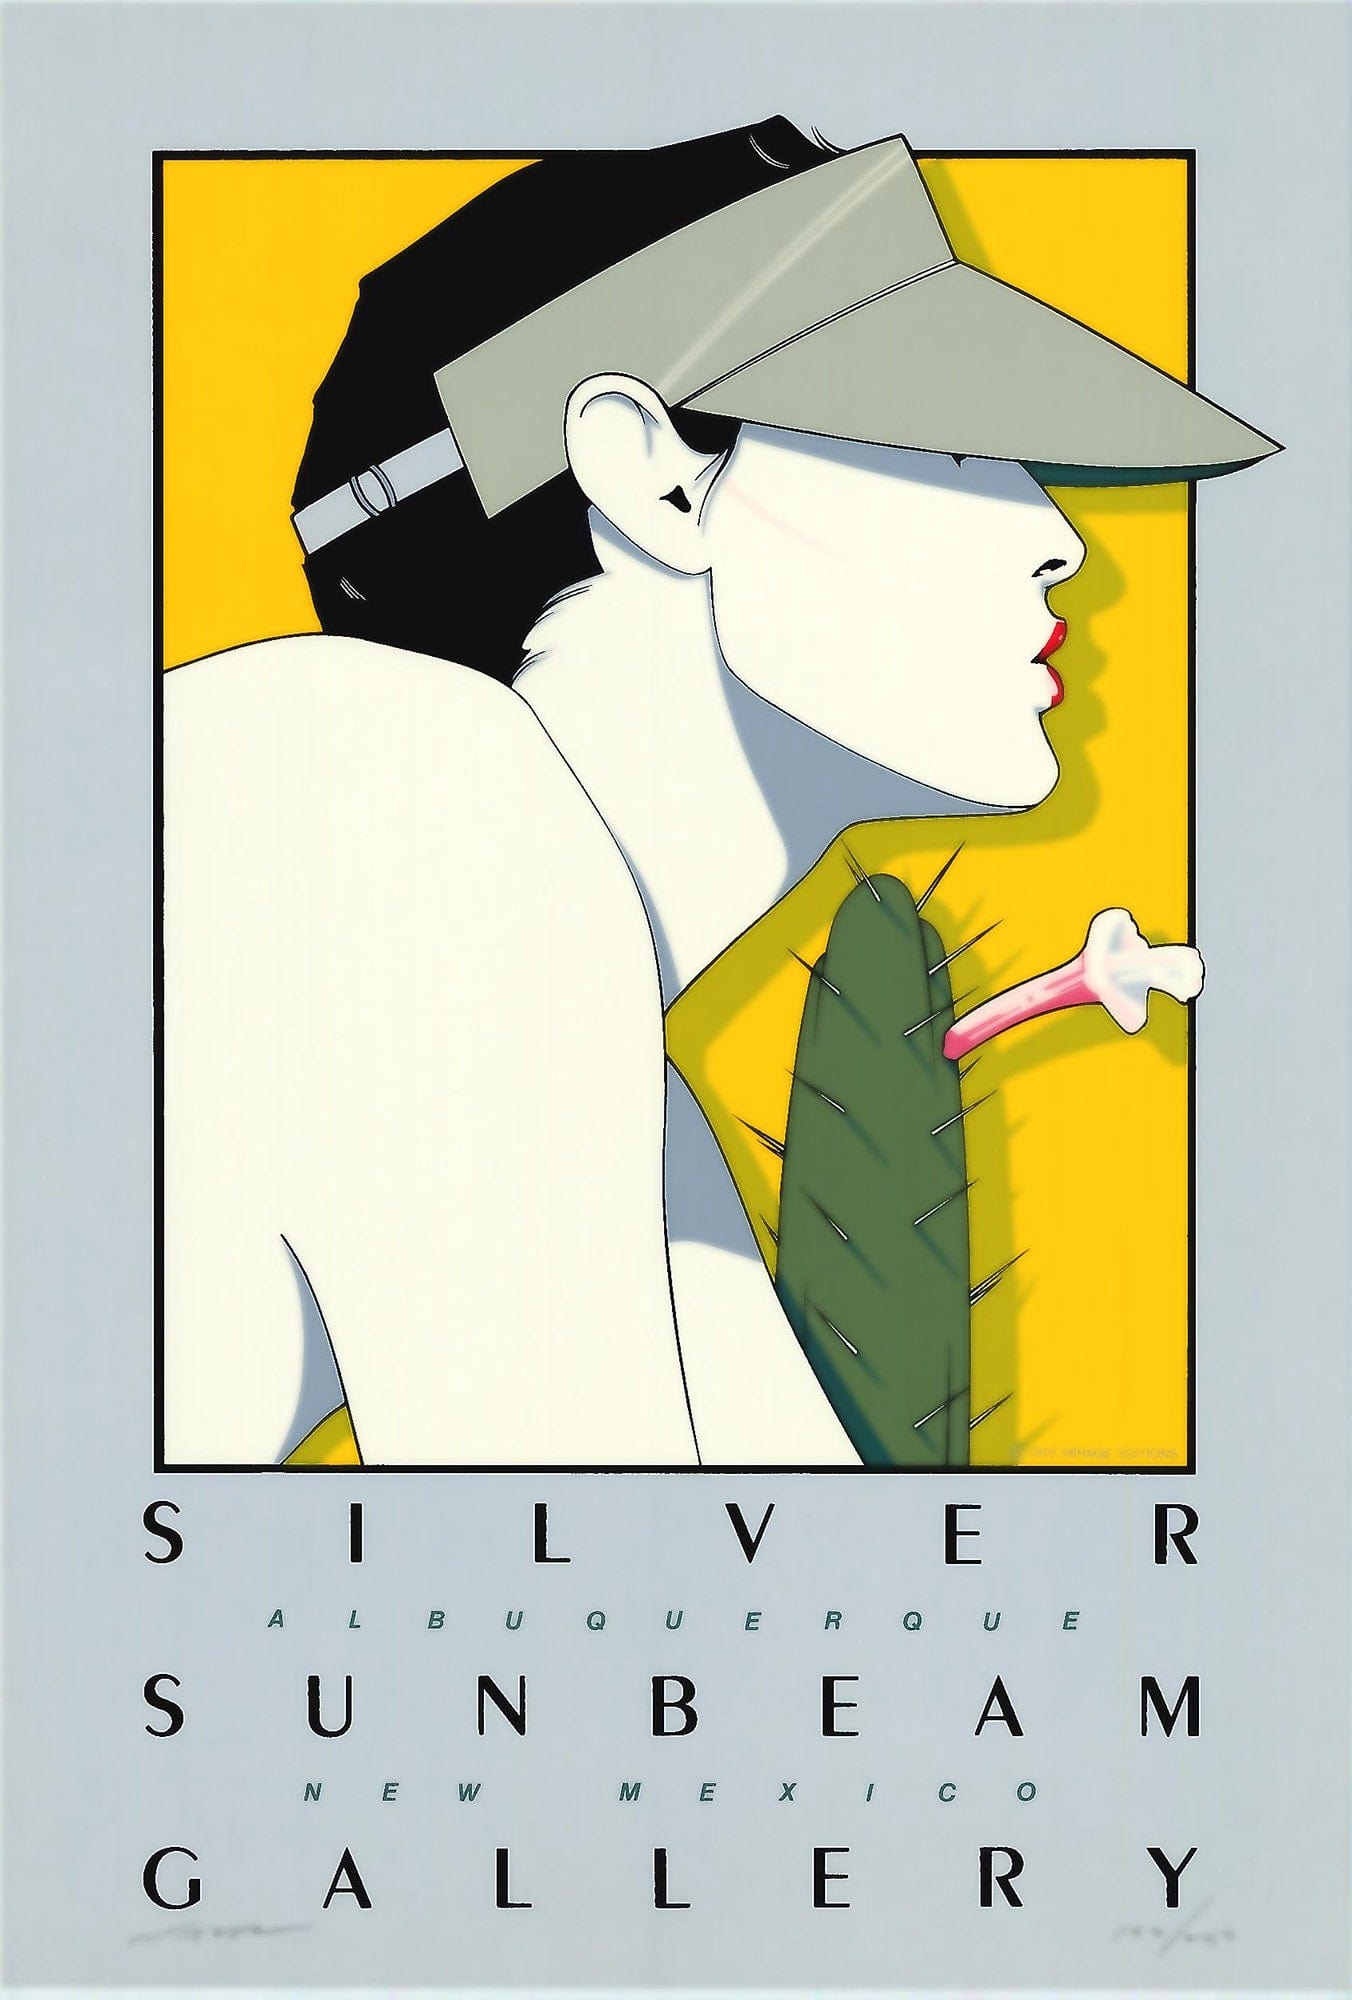 Patrick Nagel: Silver Sunbeam Gallery